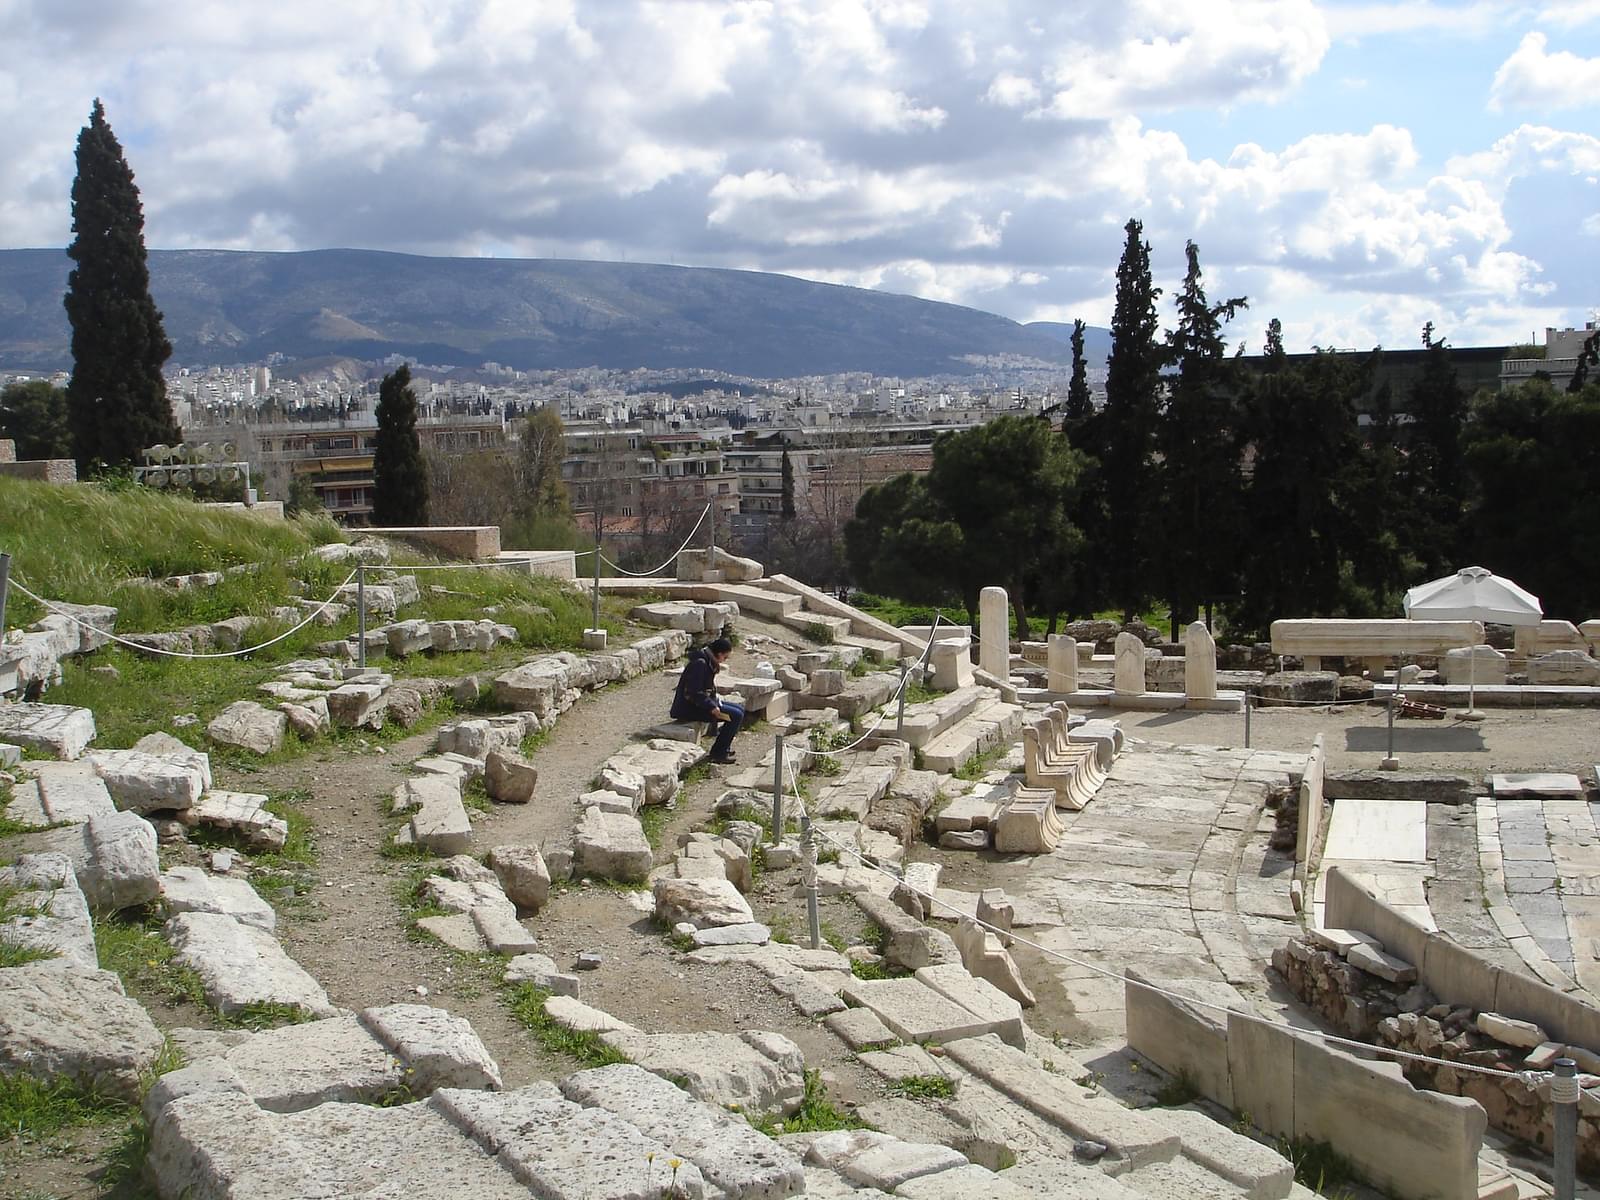 History of Theatre of Dionysus